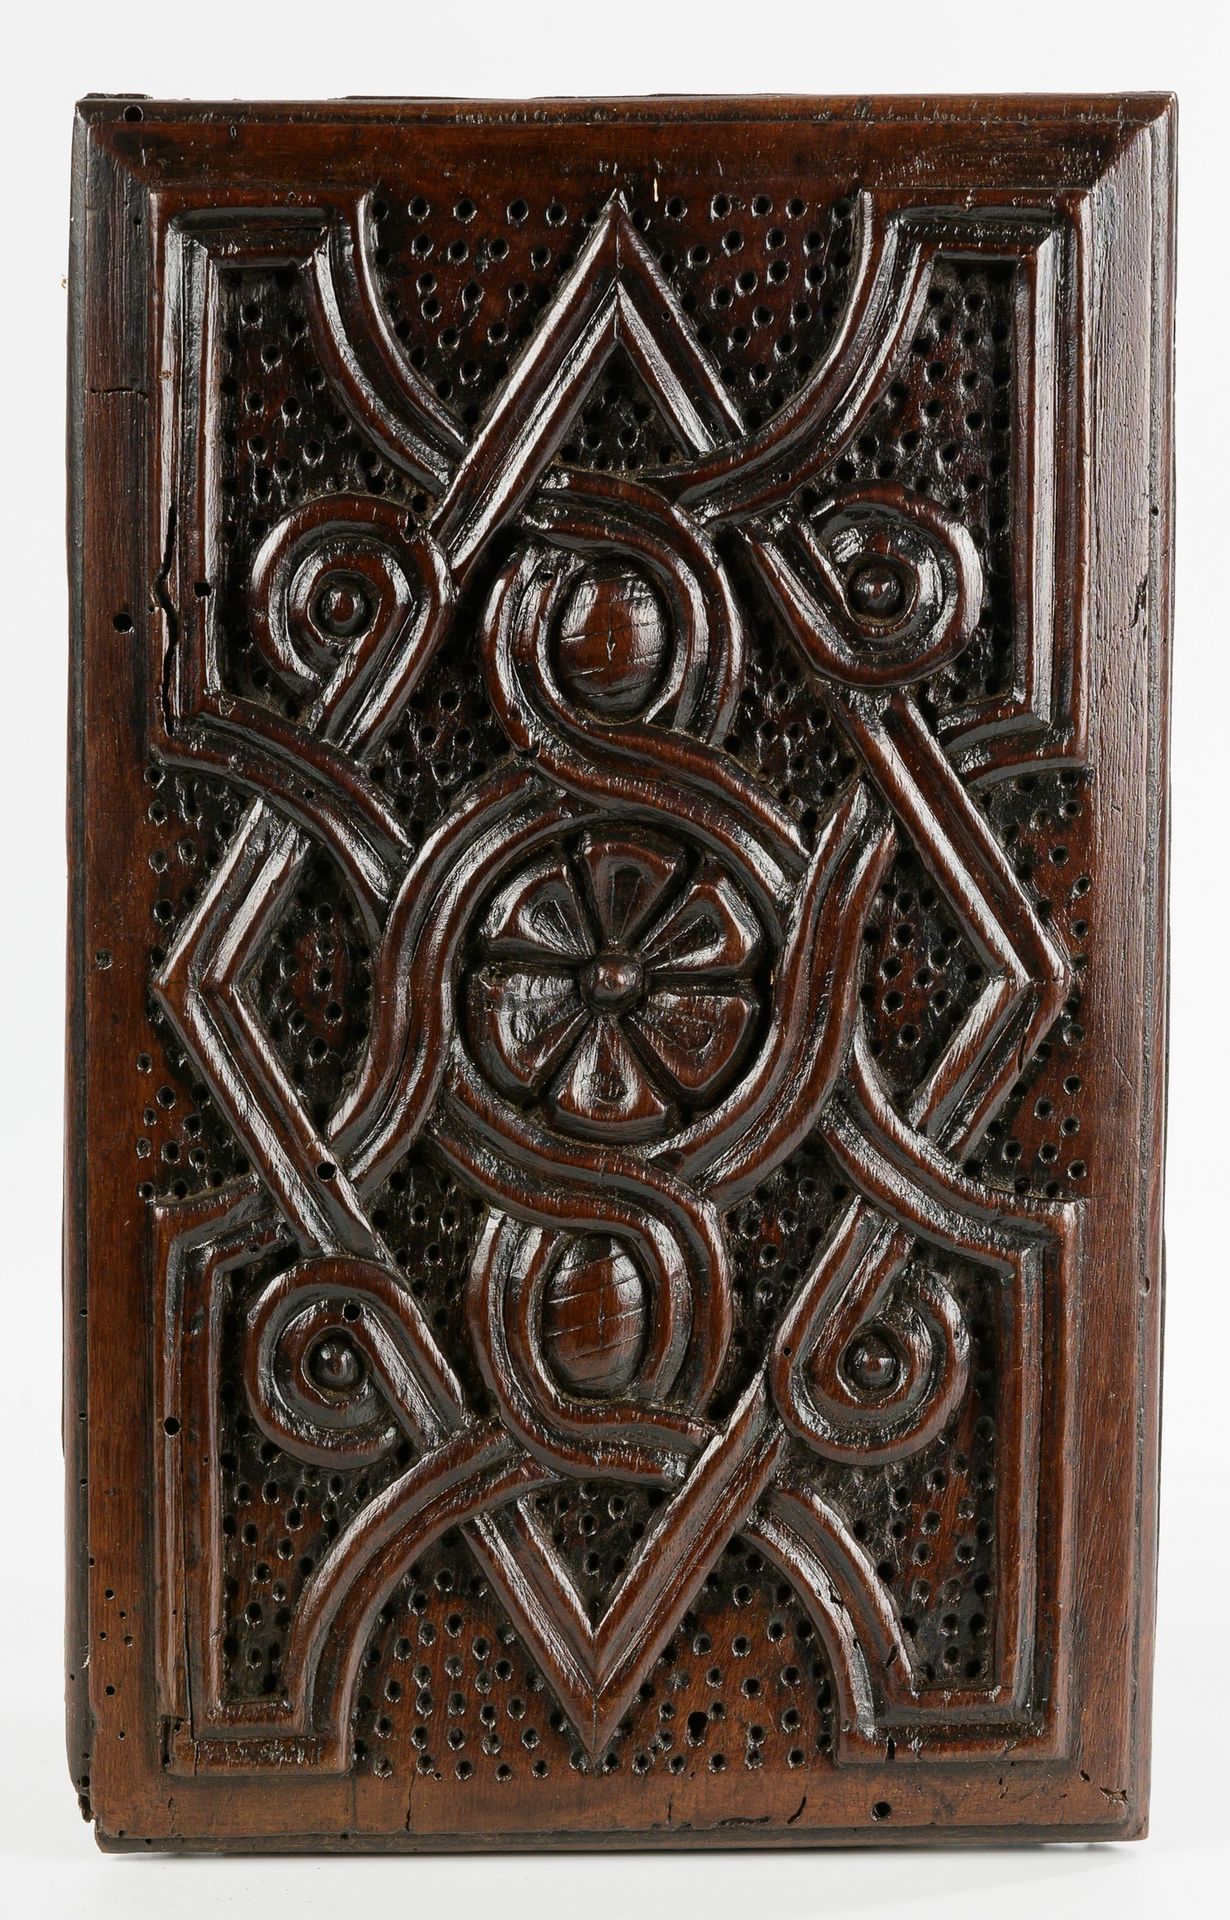 Null 胸部面板

木头。

16世纪

28 x 18 cm